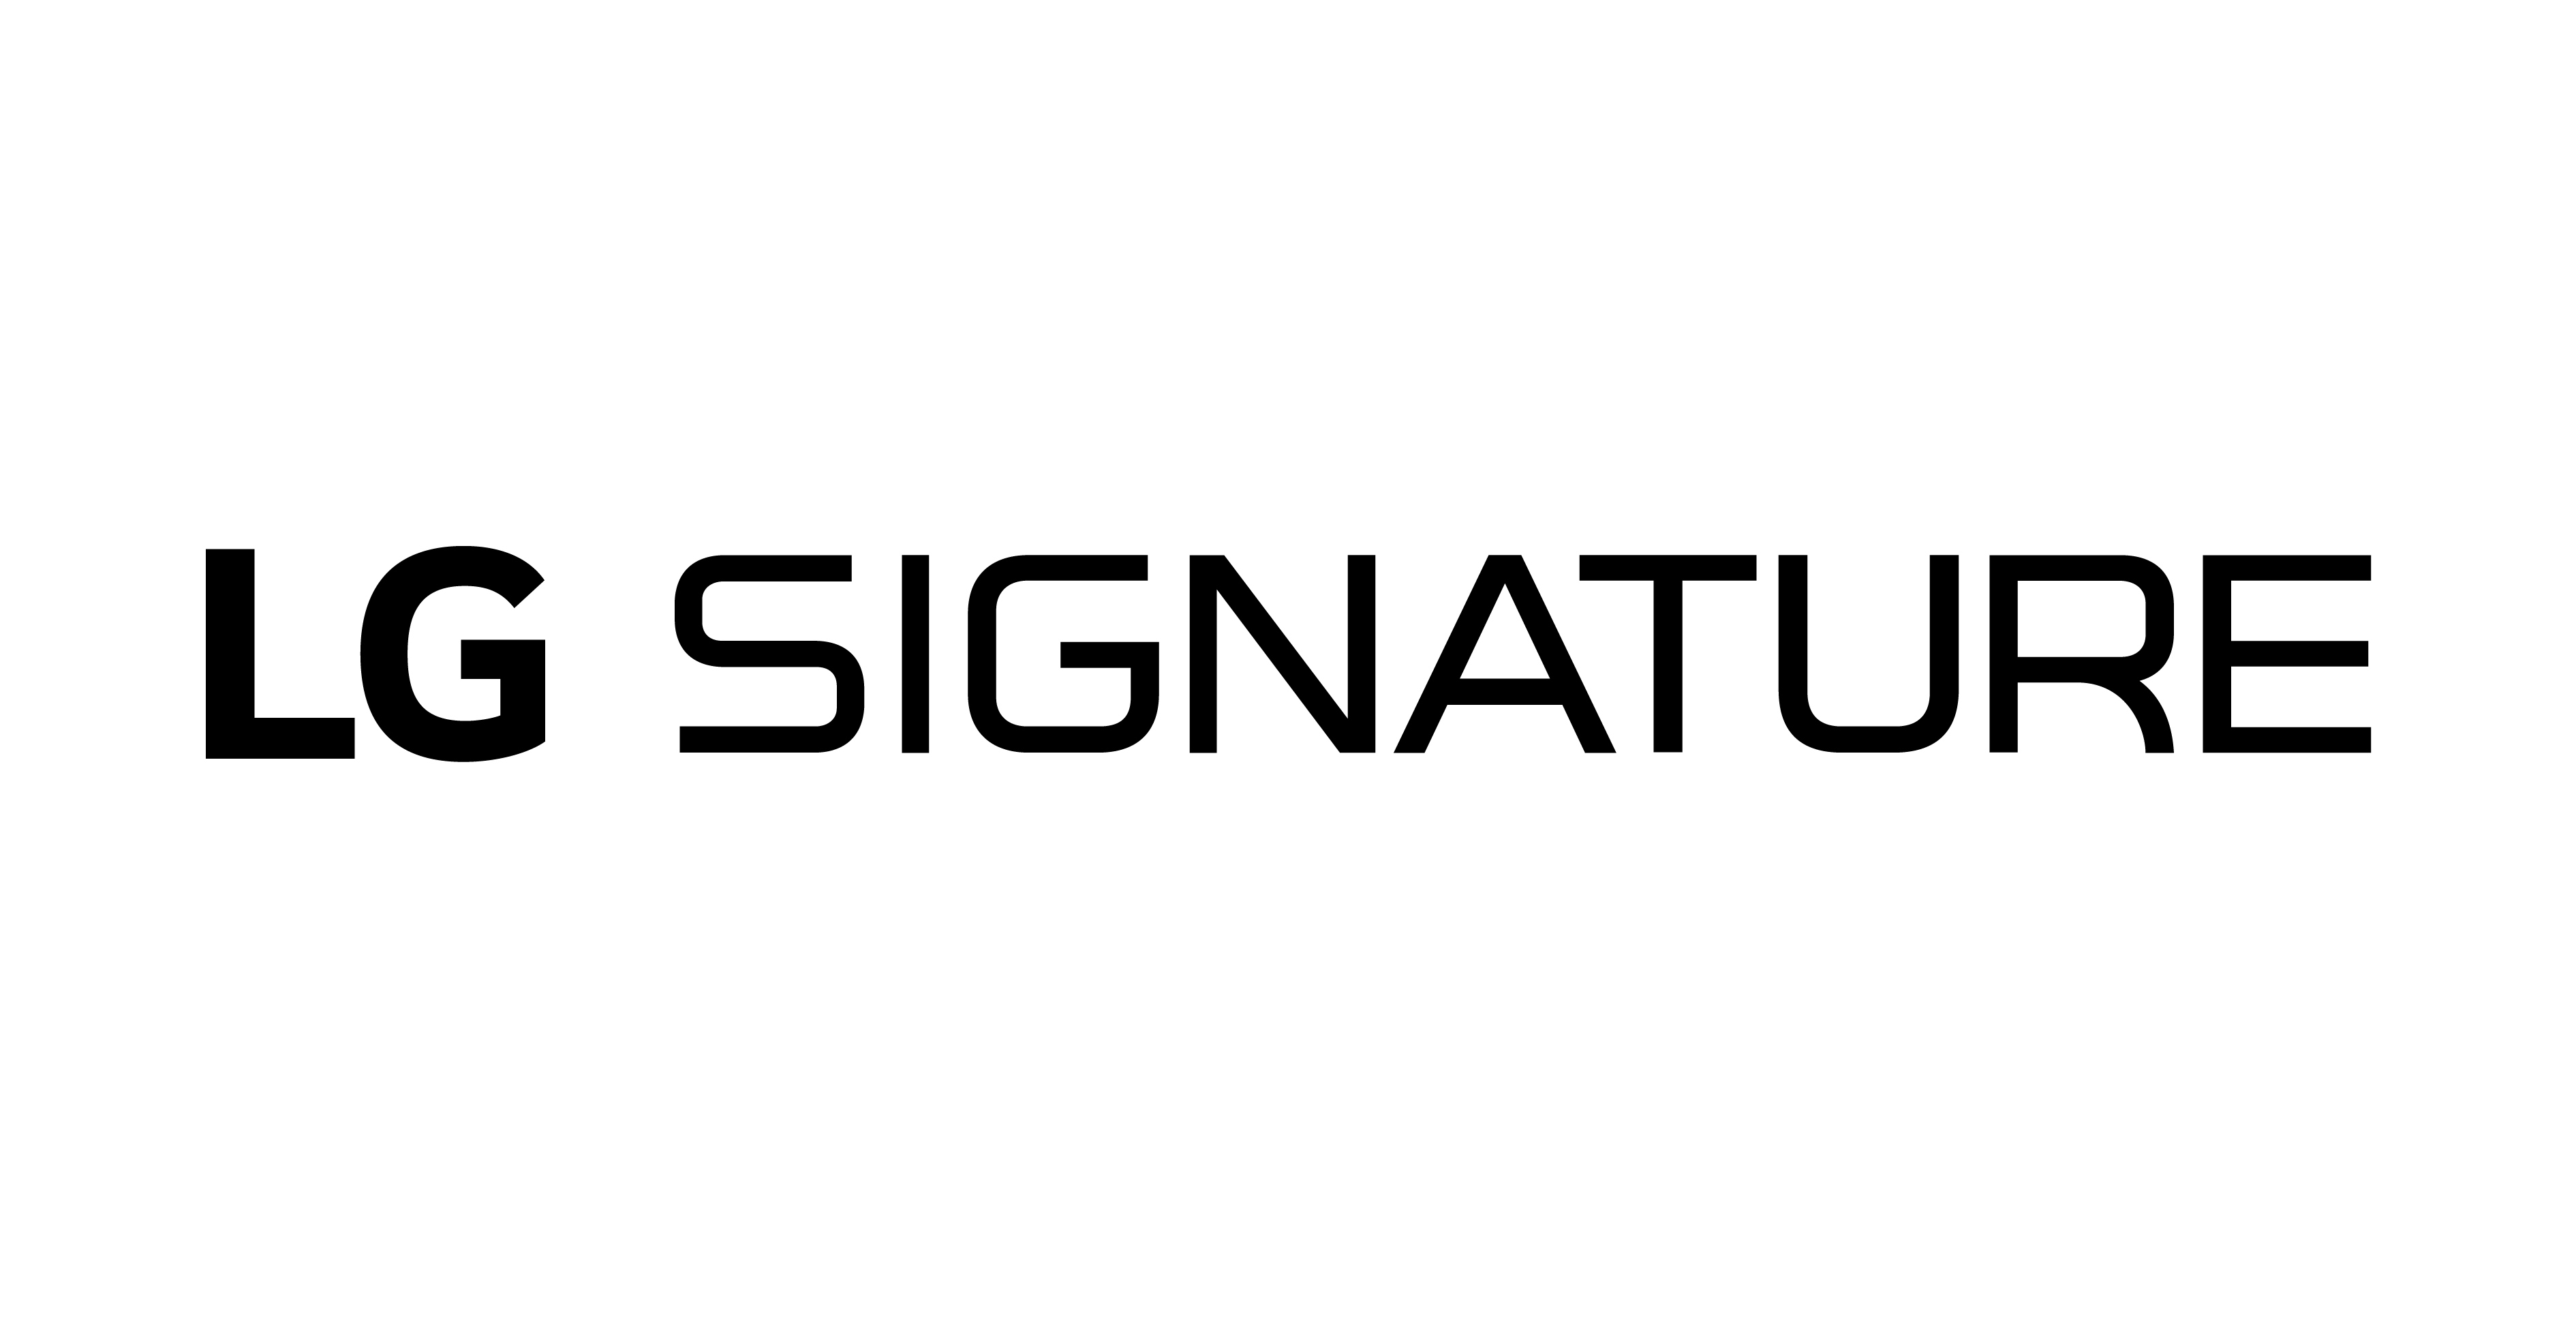 LG SIGNATURE's logo on a white background